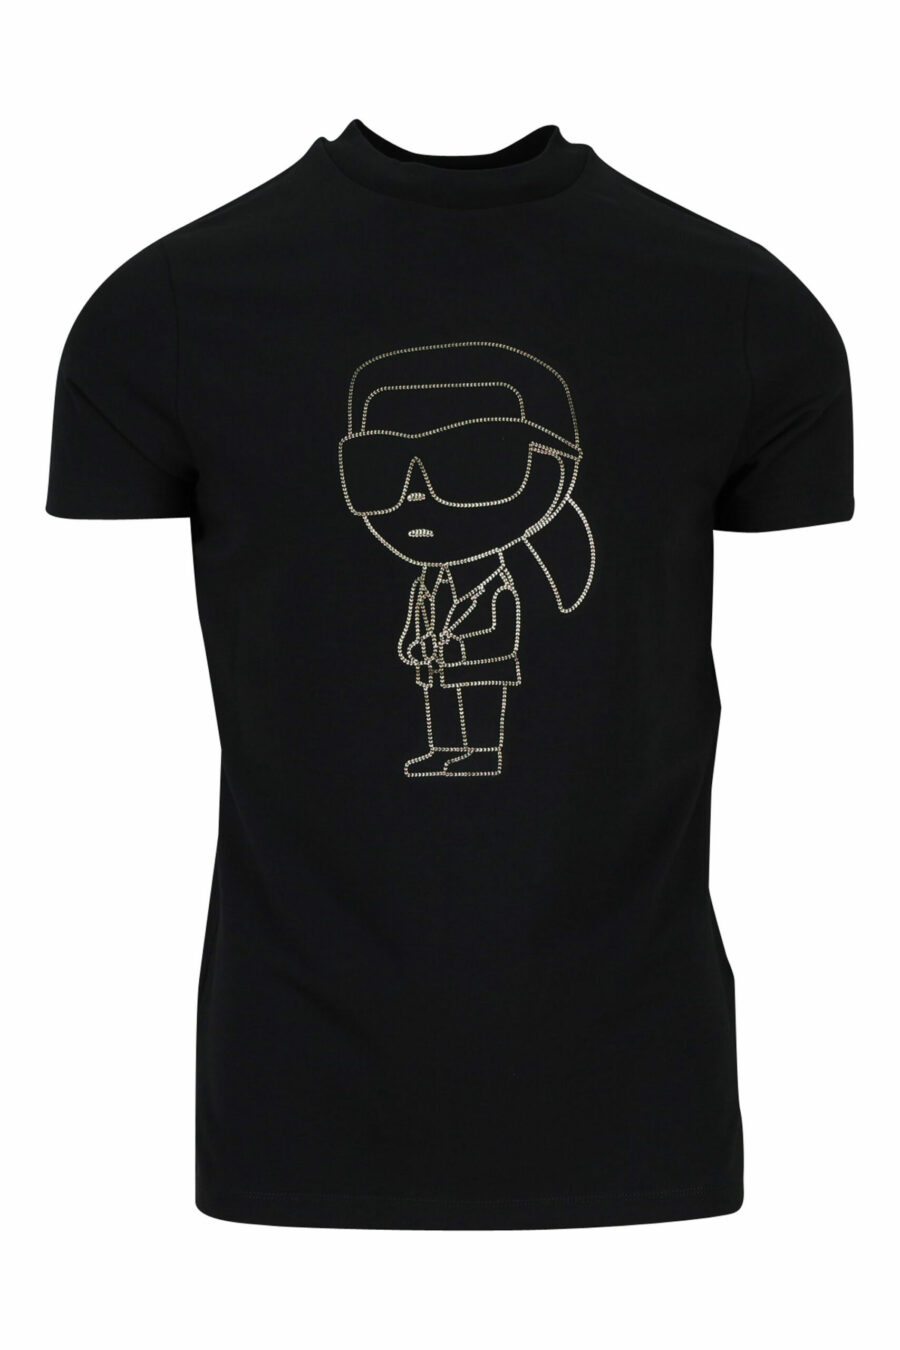 Schwarzes T-Shirt mit goldenem "karl" Maxilogo - 4062226681872 skaliert